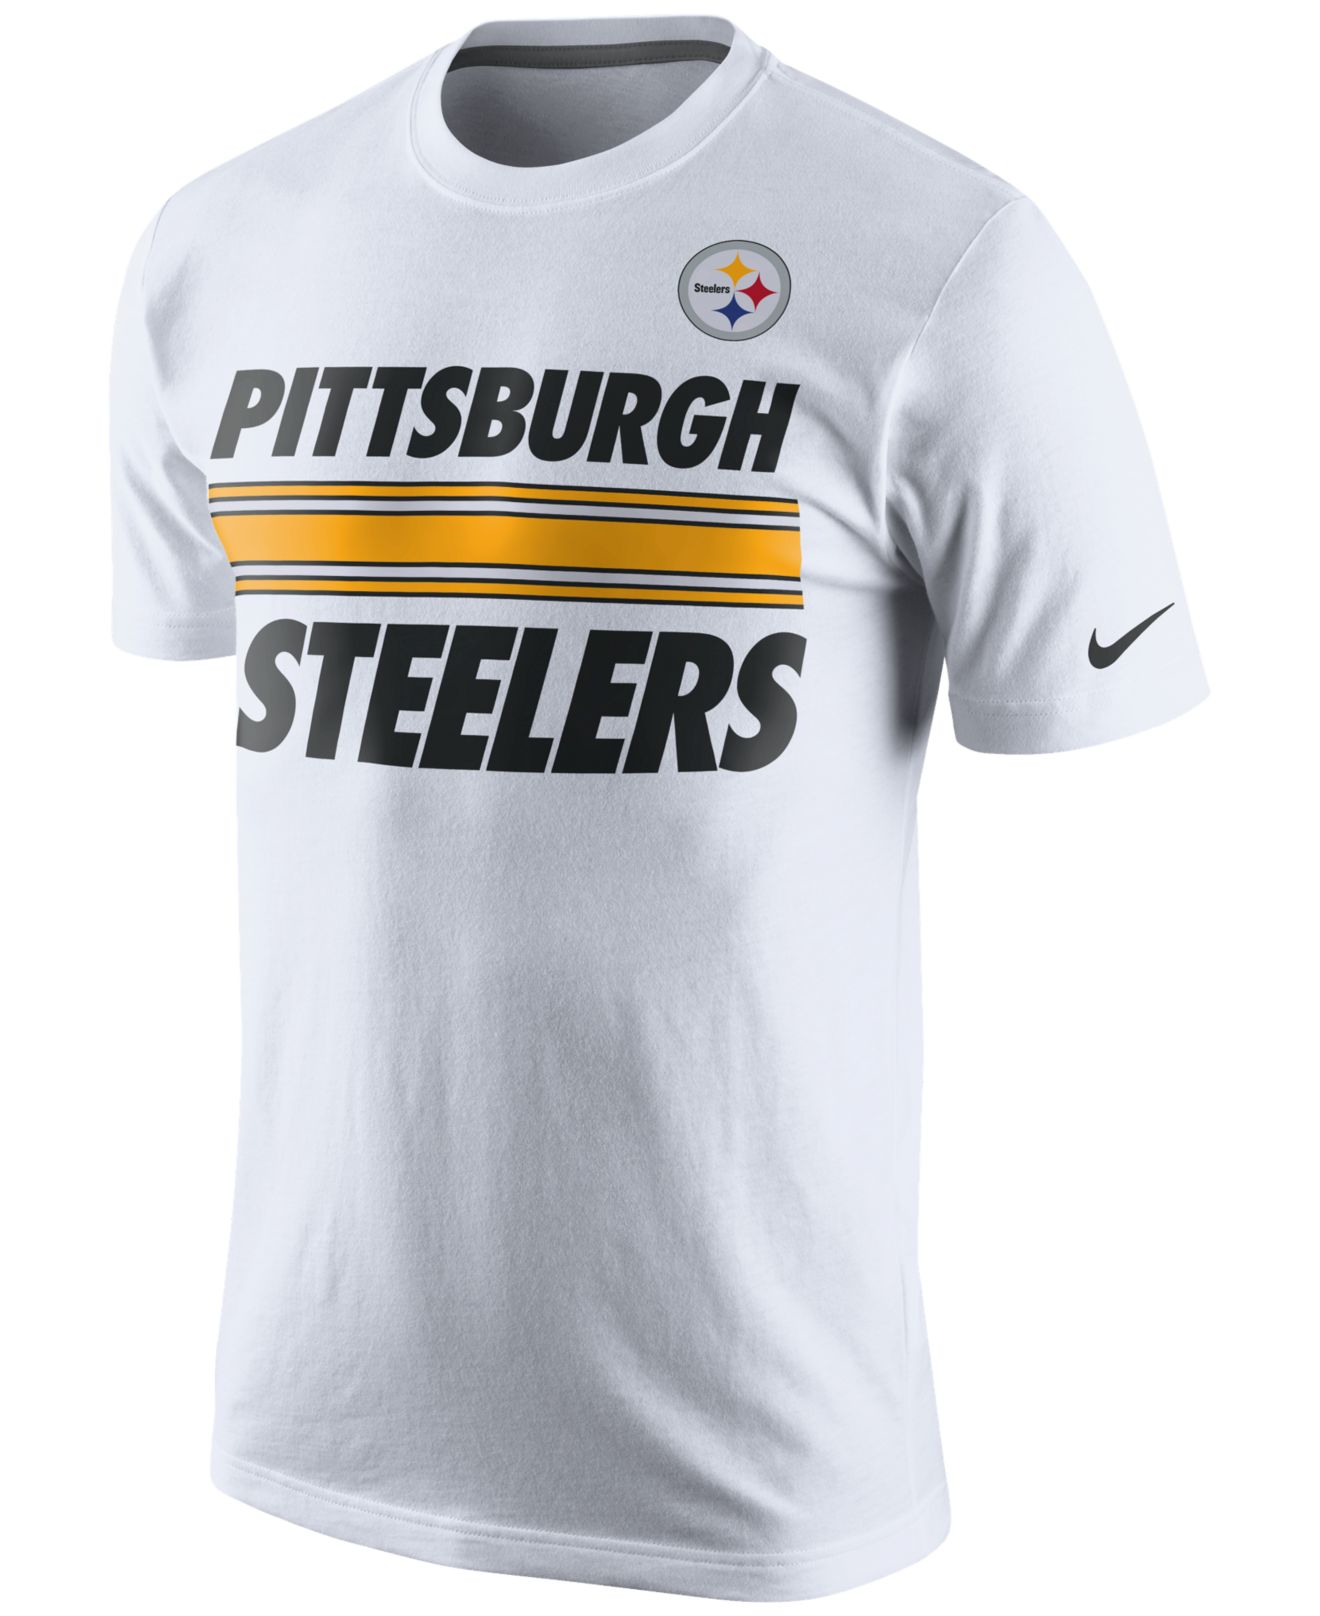 Lyst Nike Men's Pittsburgh Steelers Team Stripe Tshirt in White for Men